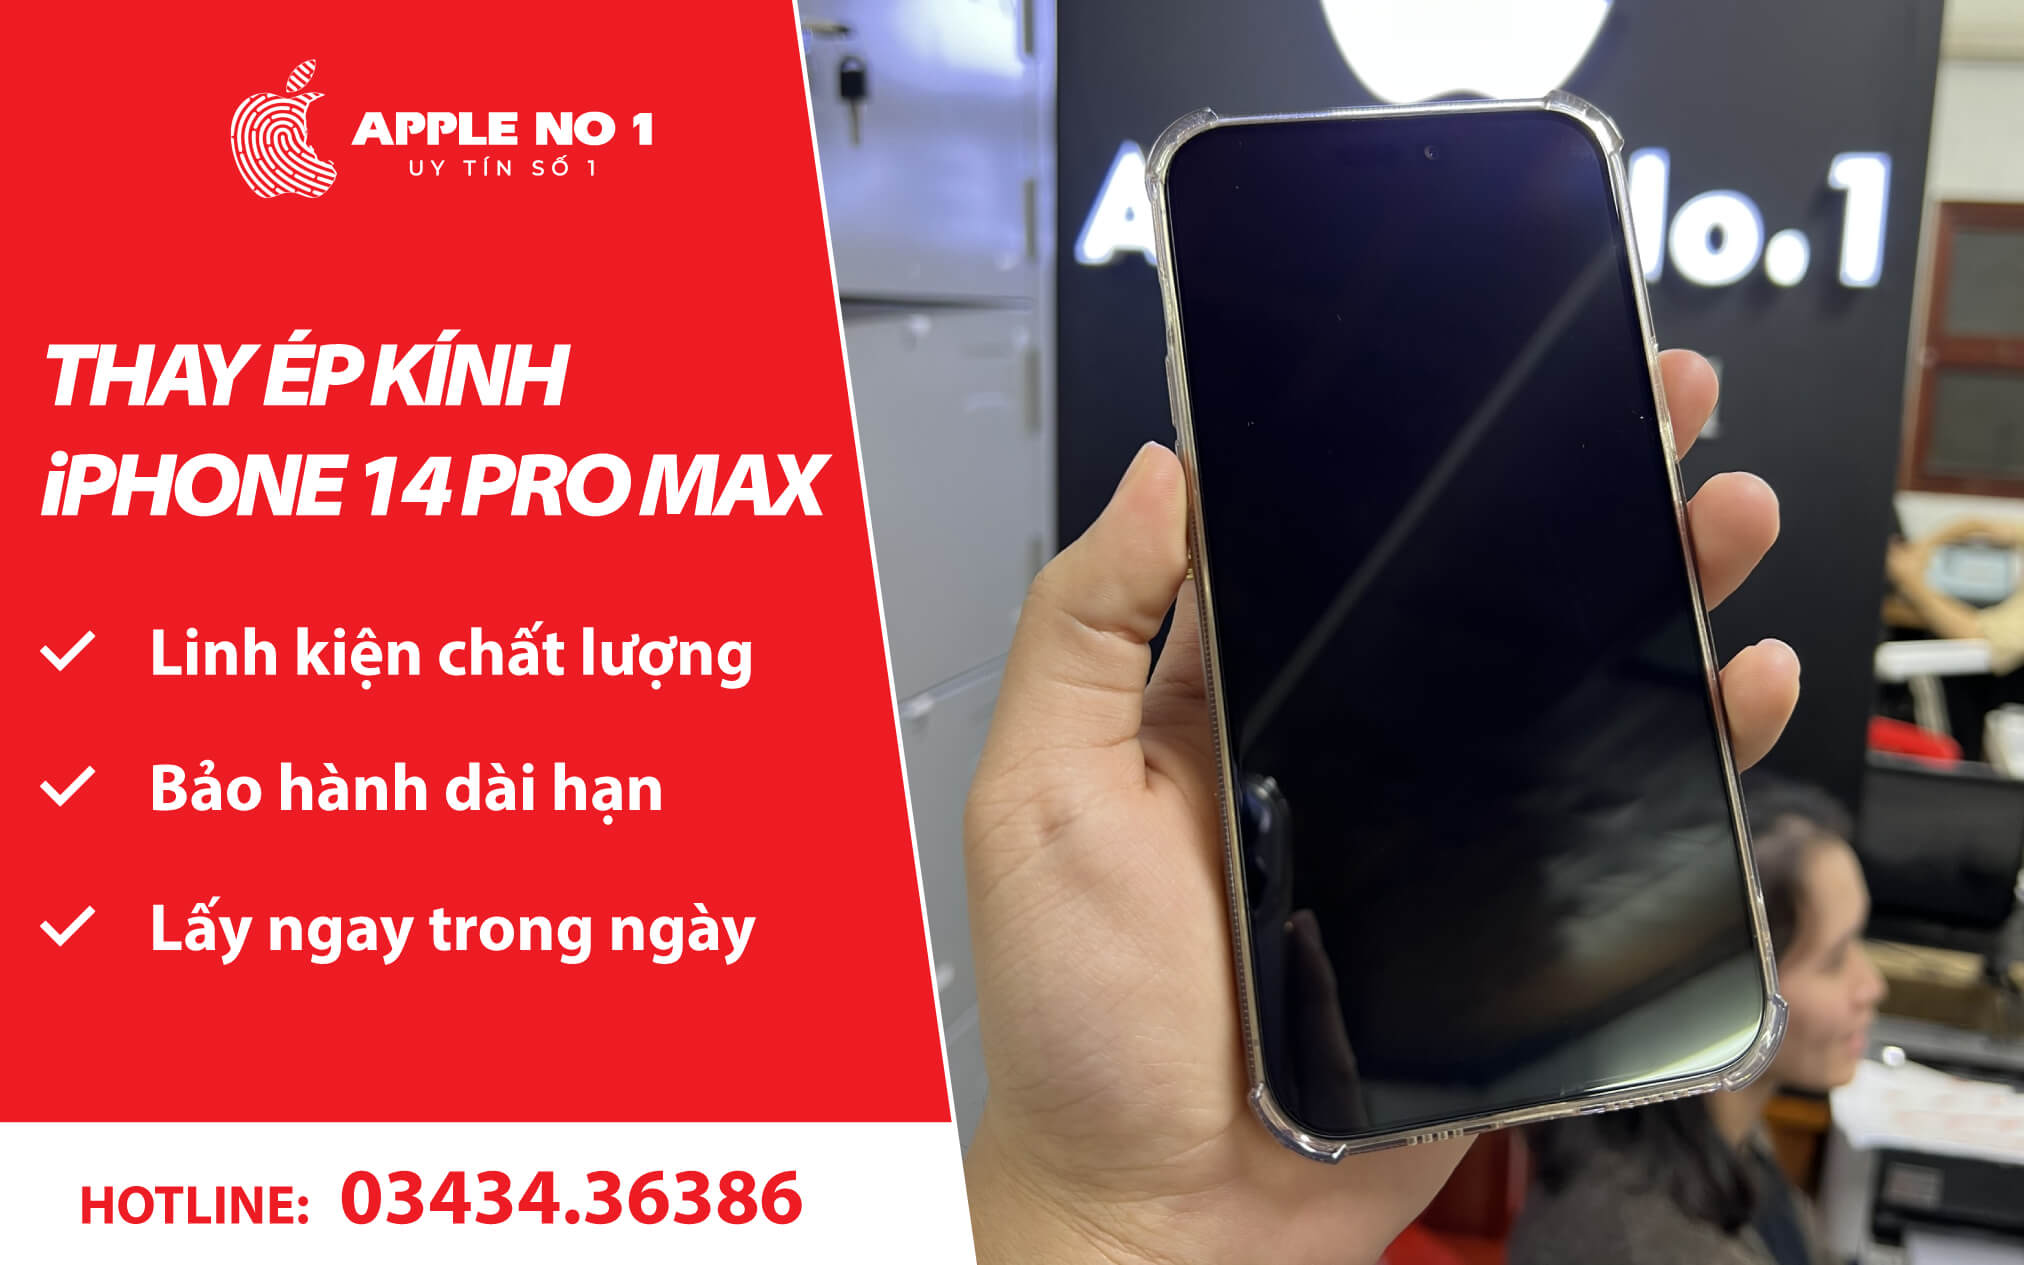 thay ep kinh iphone 14 pro max tại apple no.1